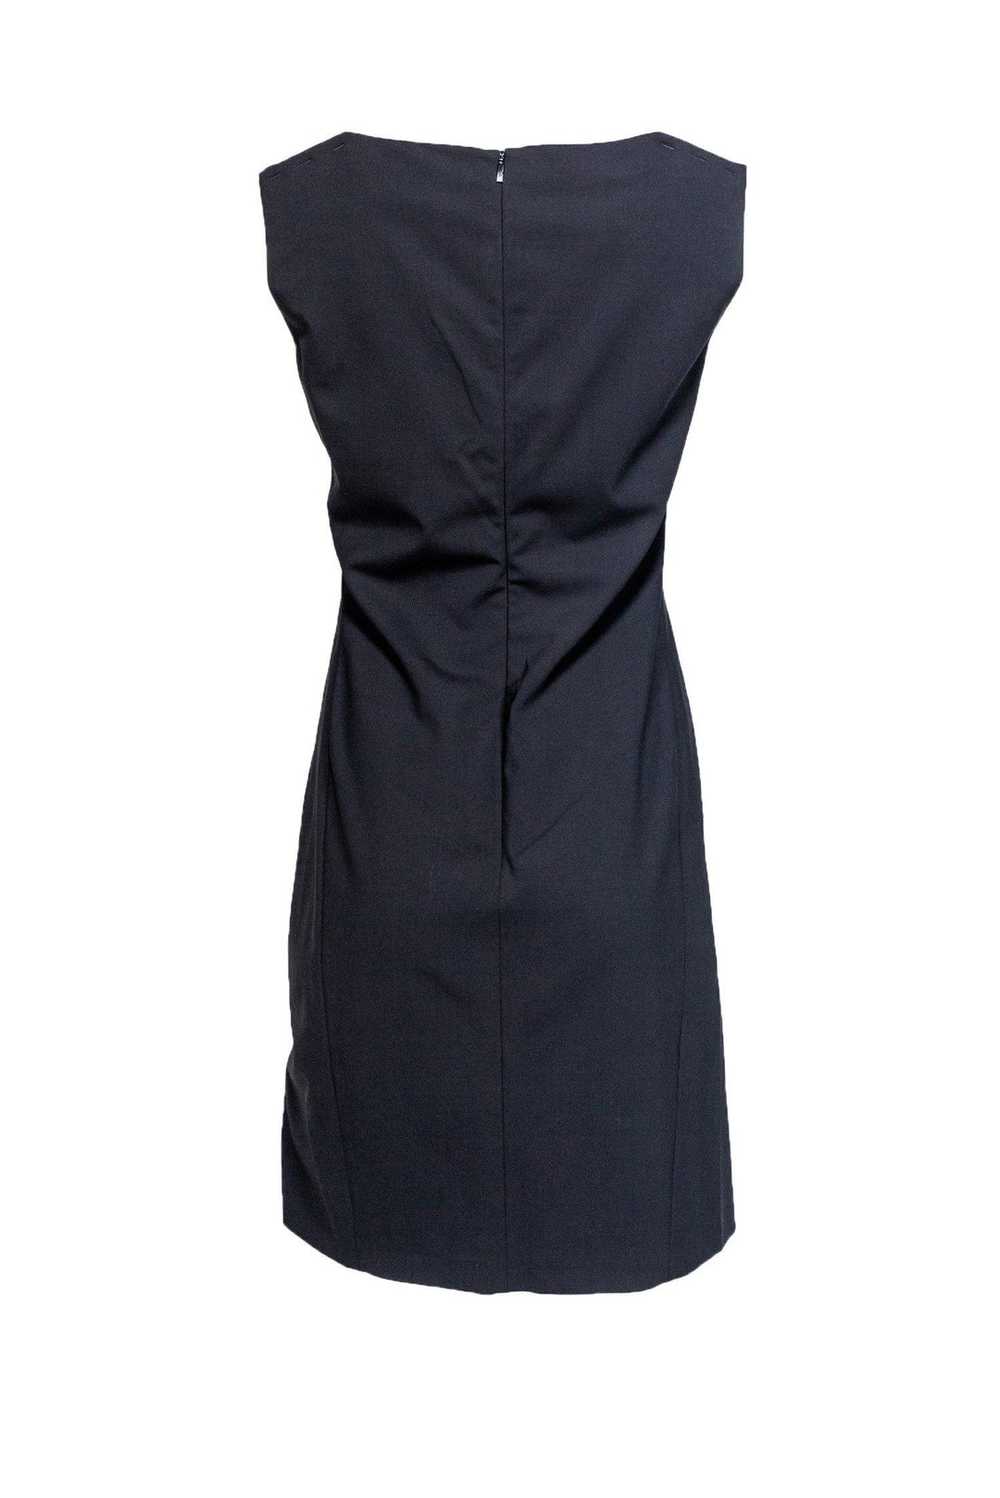 Hugo Boss - Black Dress w/ Pintuck Detail Sz 4 - image 3